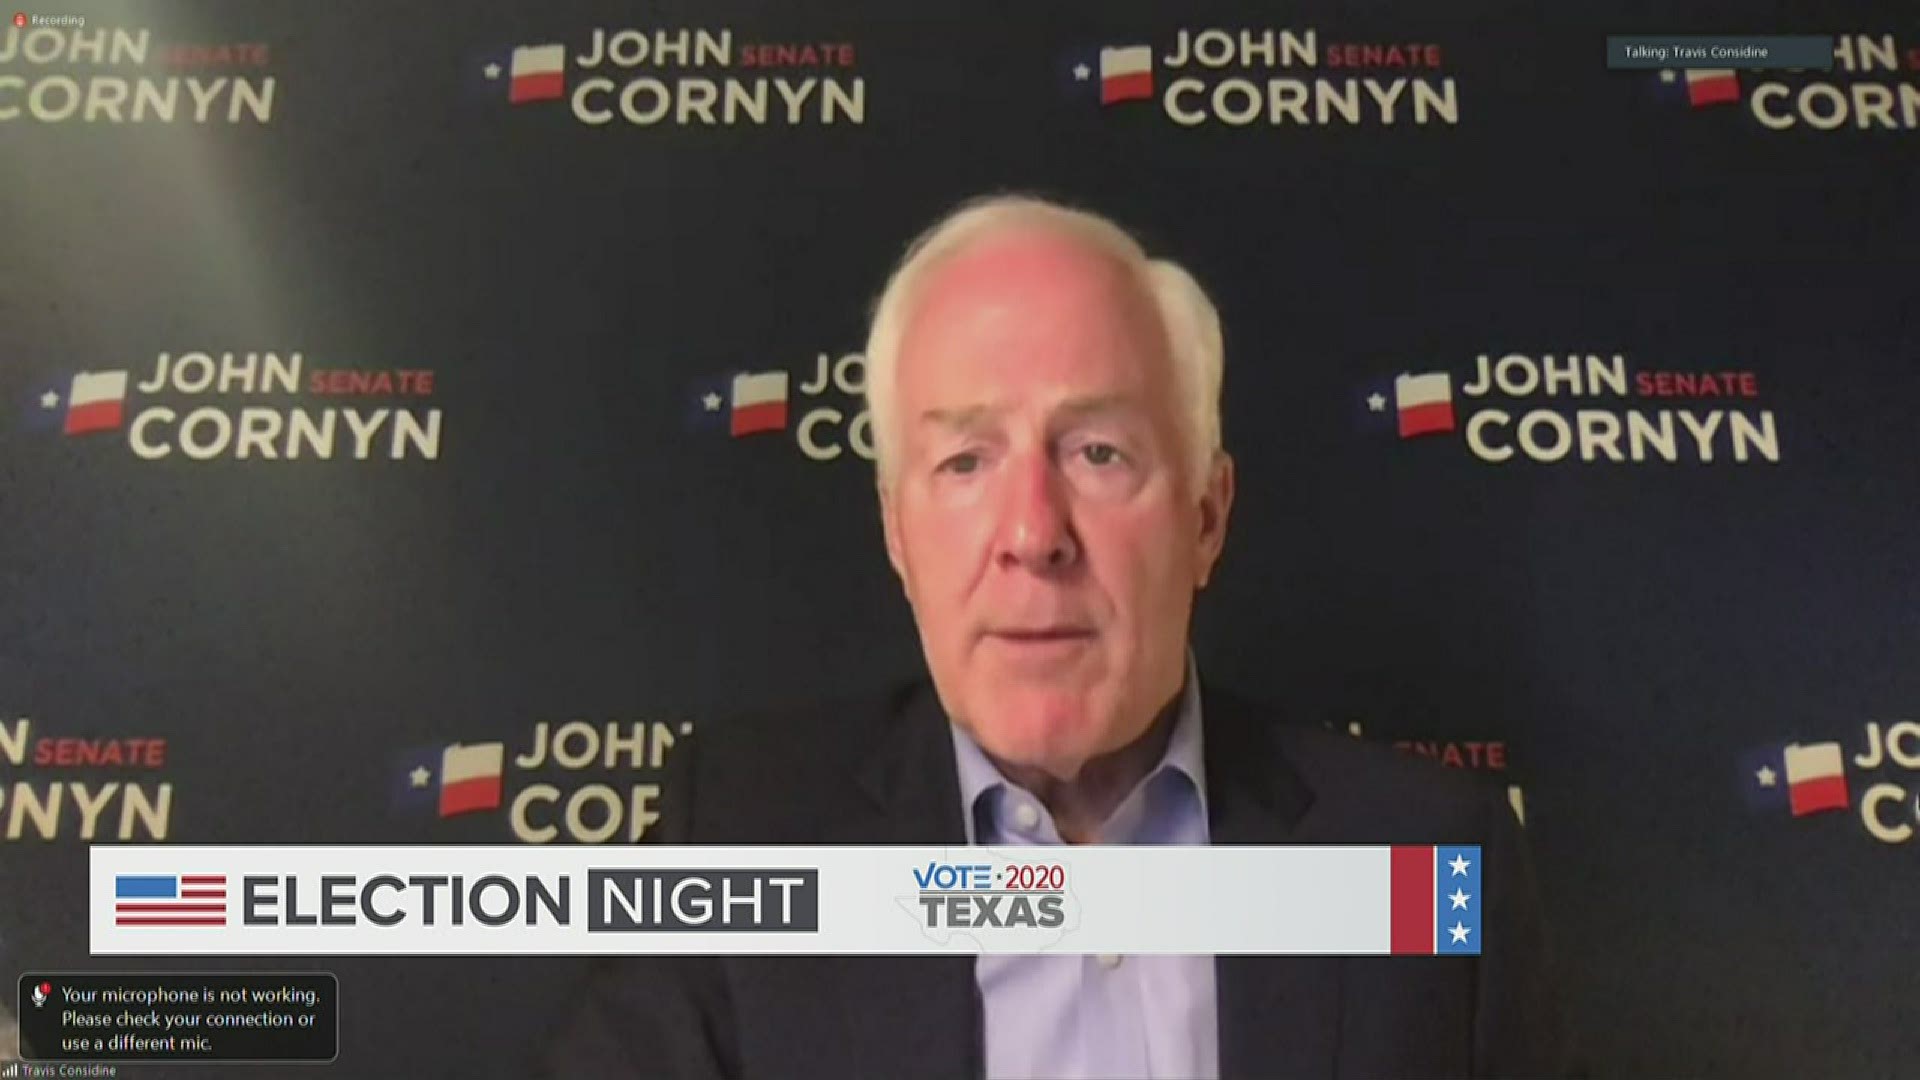 U.S. Sen. John Cornyn spoke on Election Night after MJ Hegar conceded the Senate race.